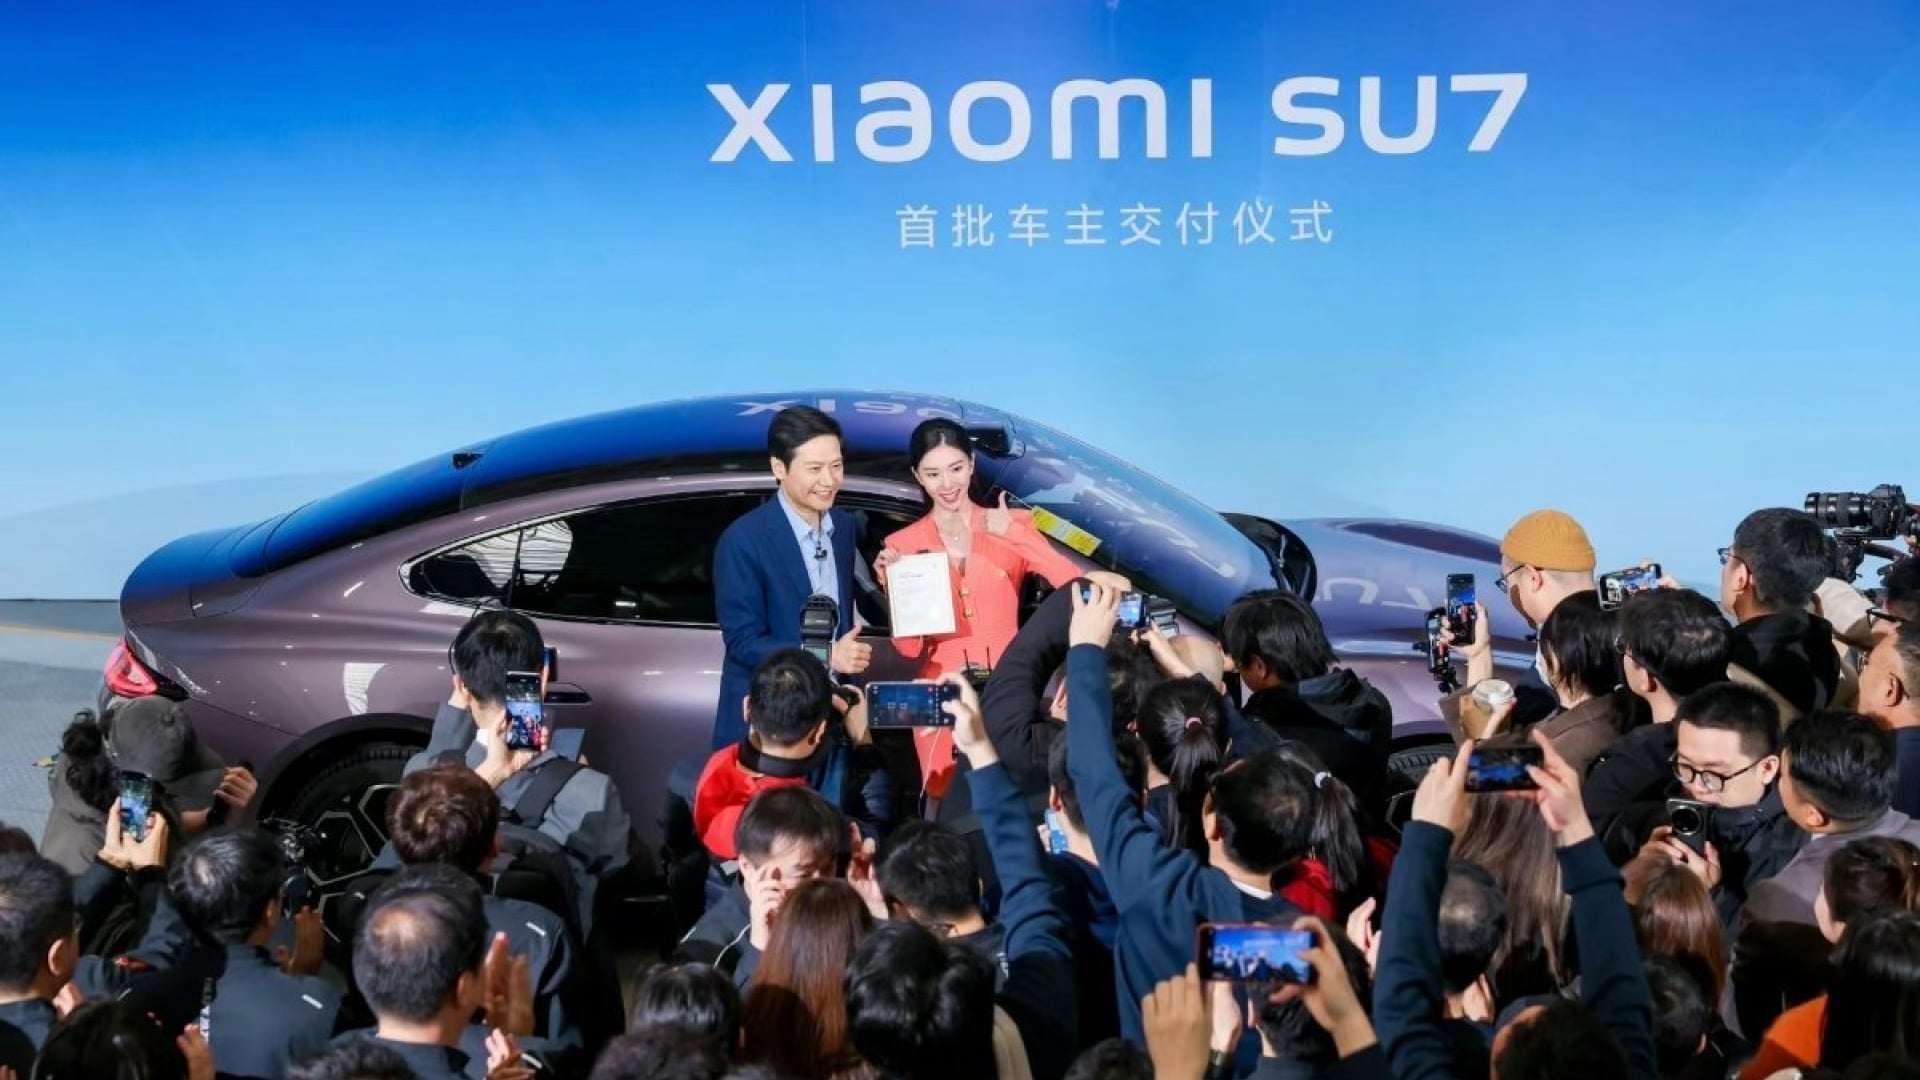 Xiaomi CEO Lei Jun started deliveries of Xiaomi SU7 electric sedan